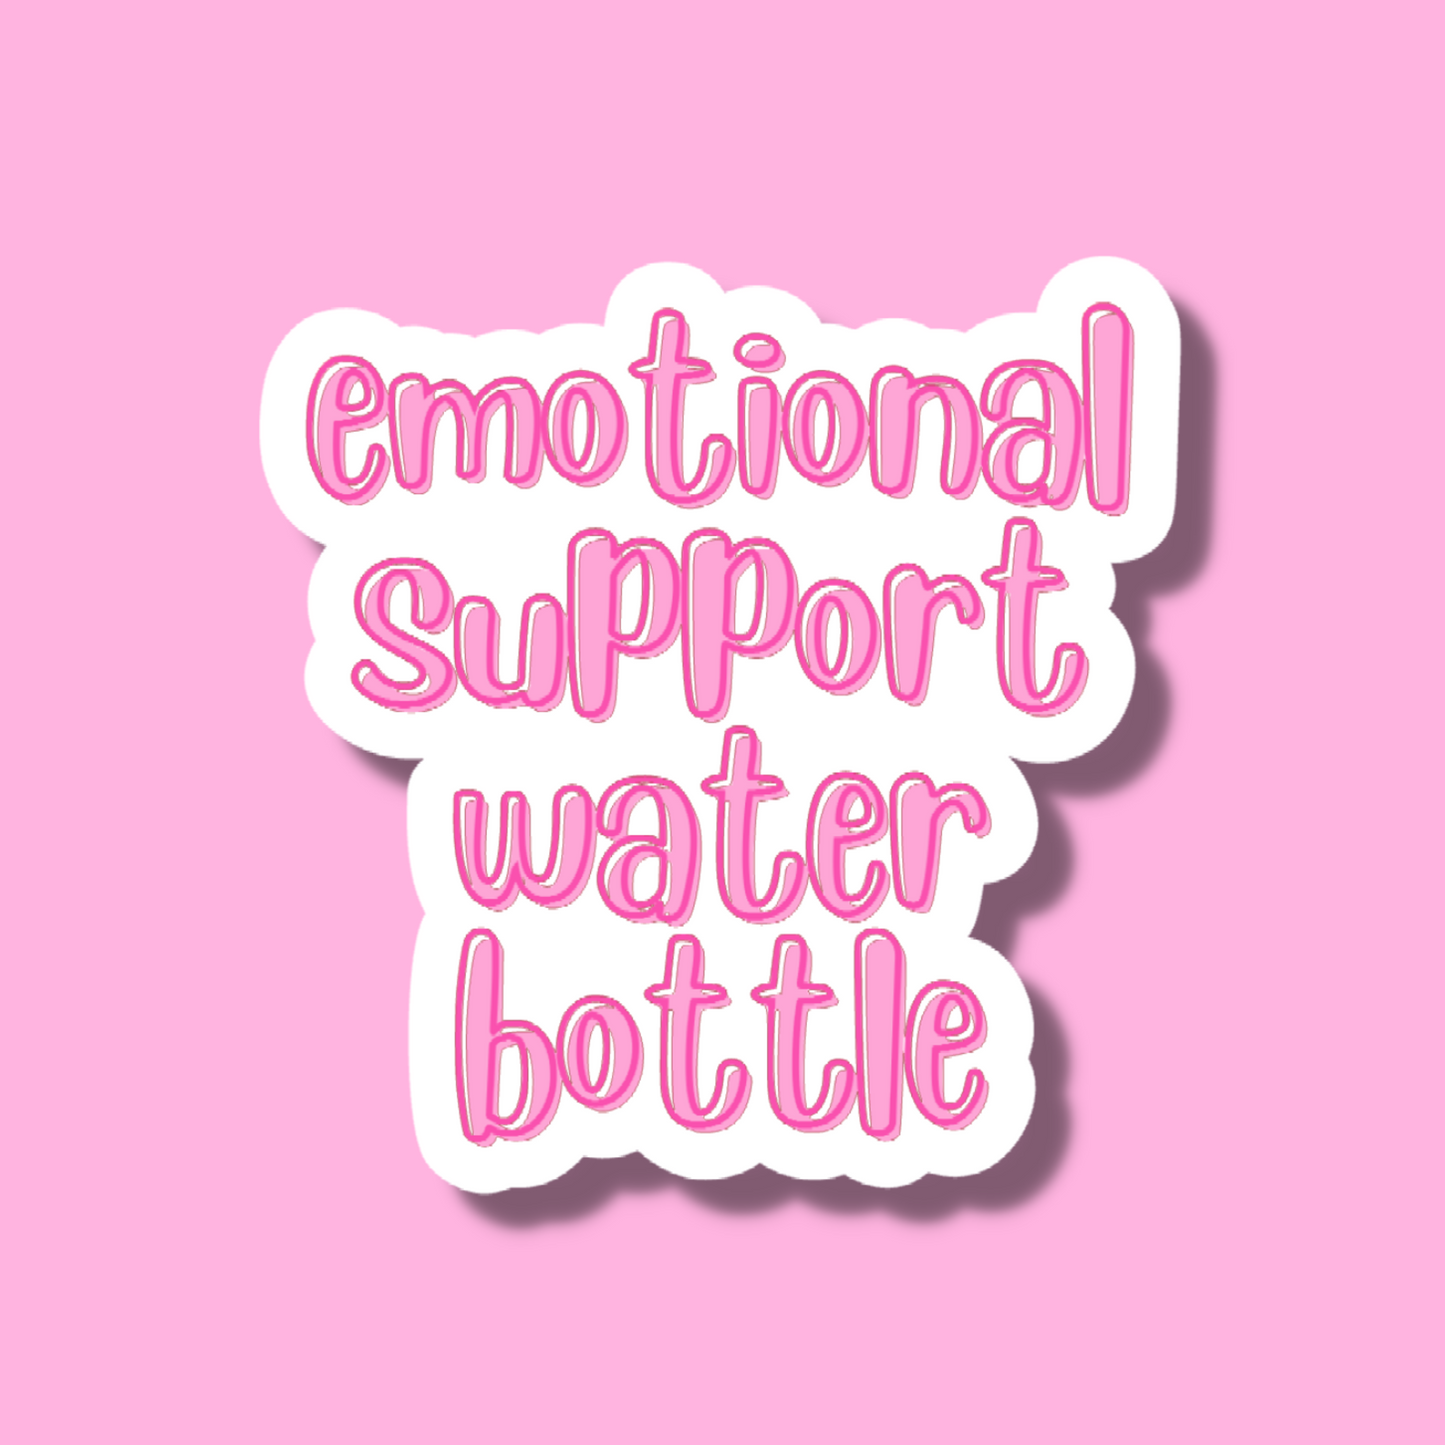 Emotional Support Water Bottle Sticker / Mental Health Sticker / Funny Water Bottle Sticker / Hydro Sticker / Drink Water Sticker